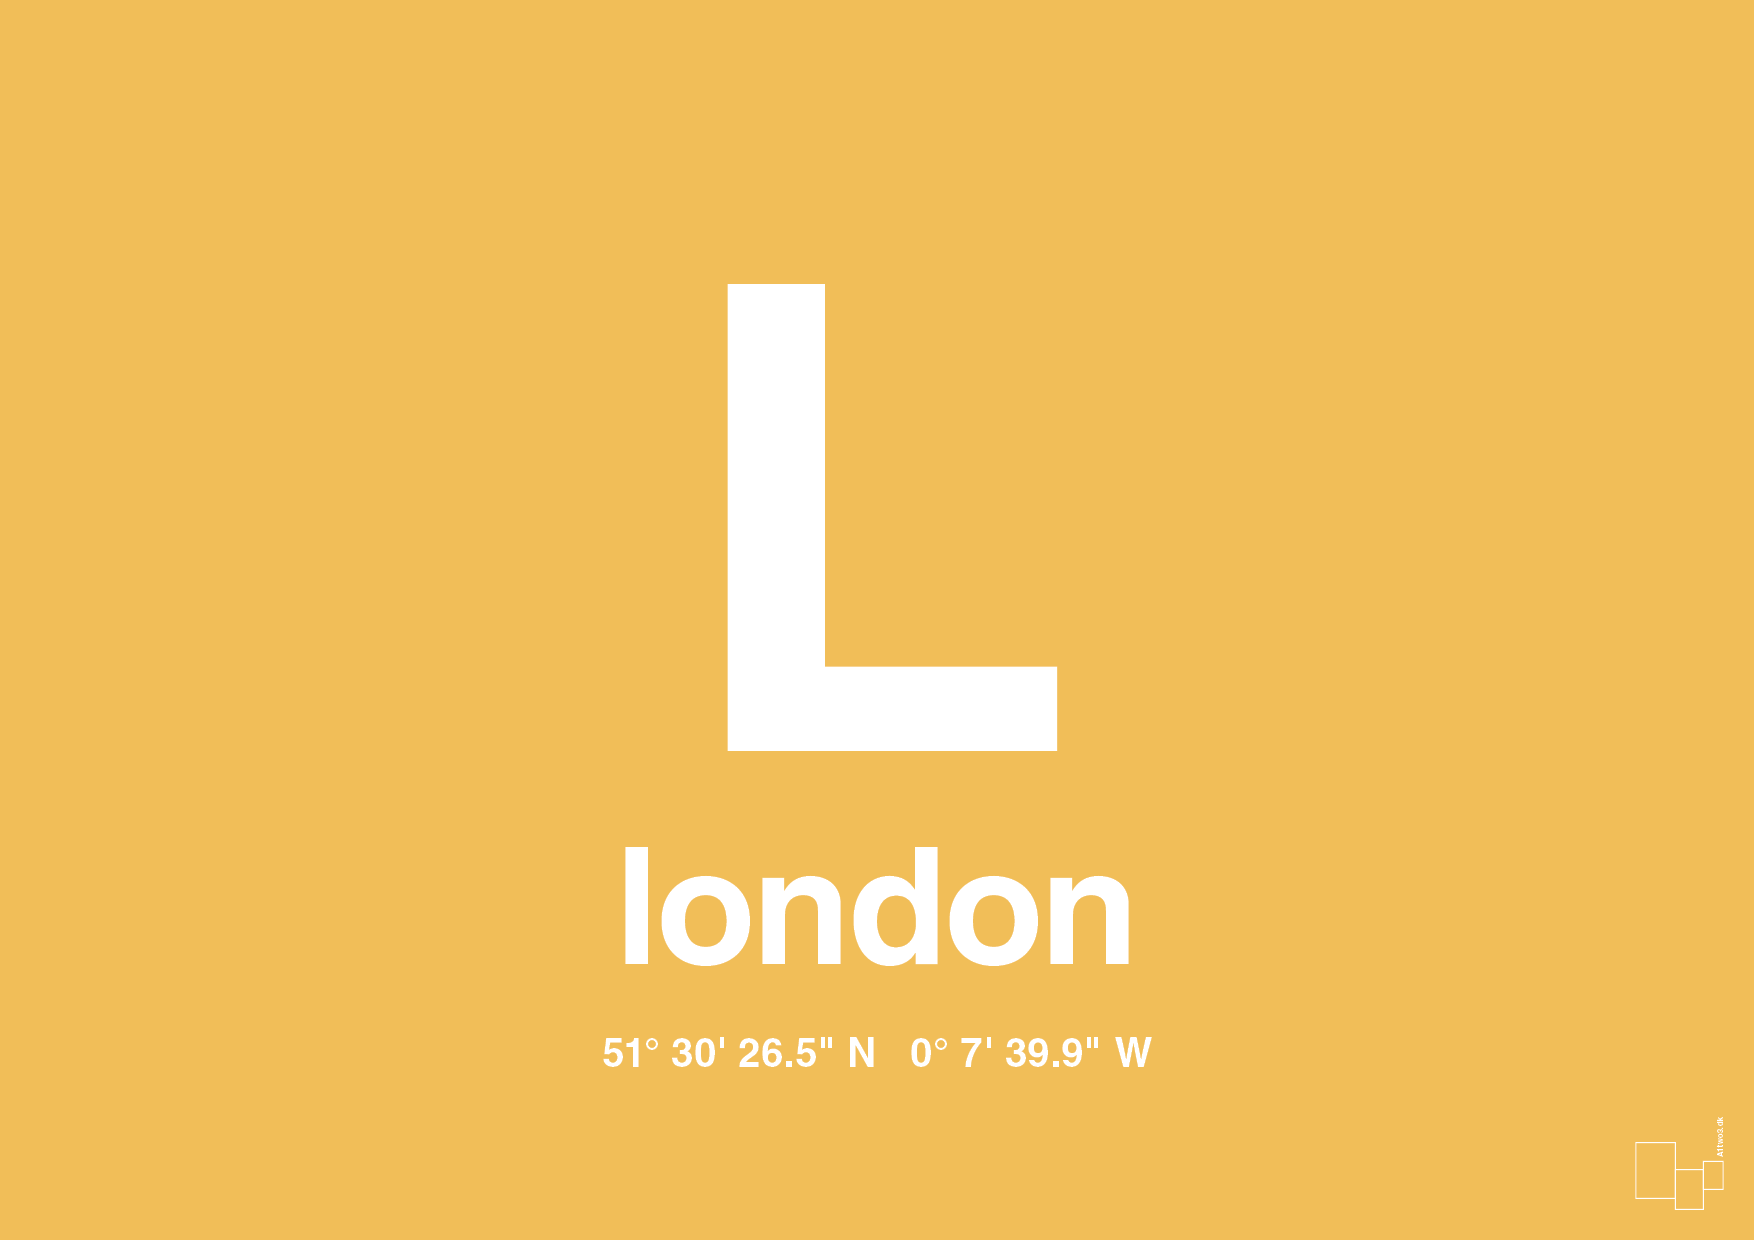 byplakat london med koordinater - Plakat med Grafik i Honeycomb